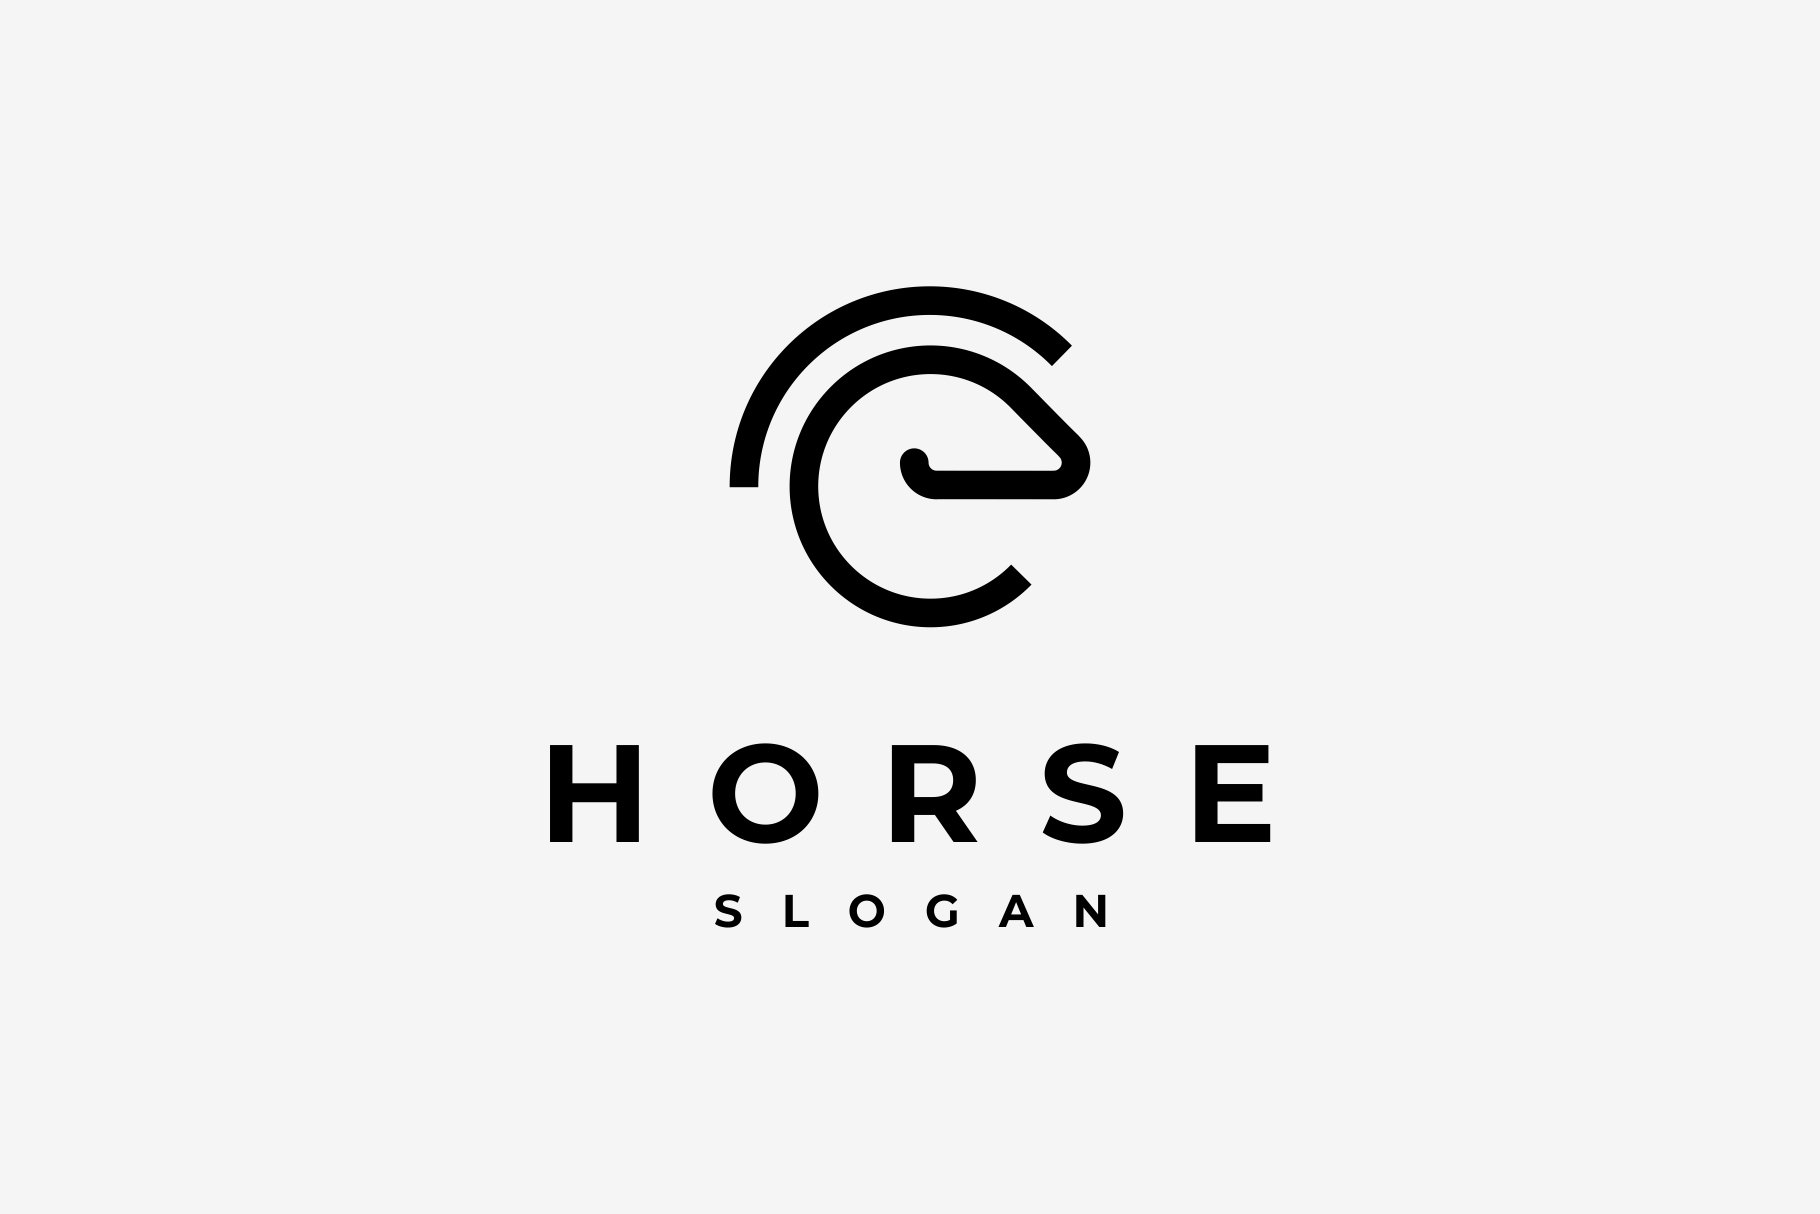 Simple Horse Stallion Equine Logo cover image.